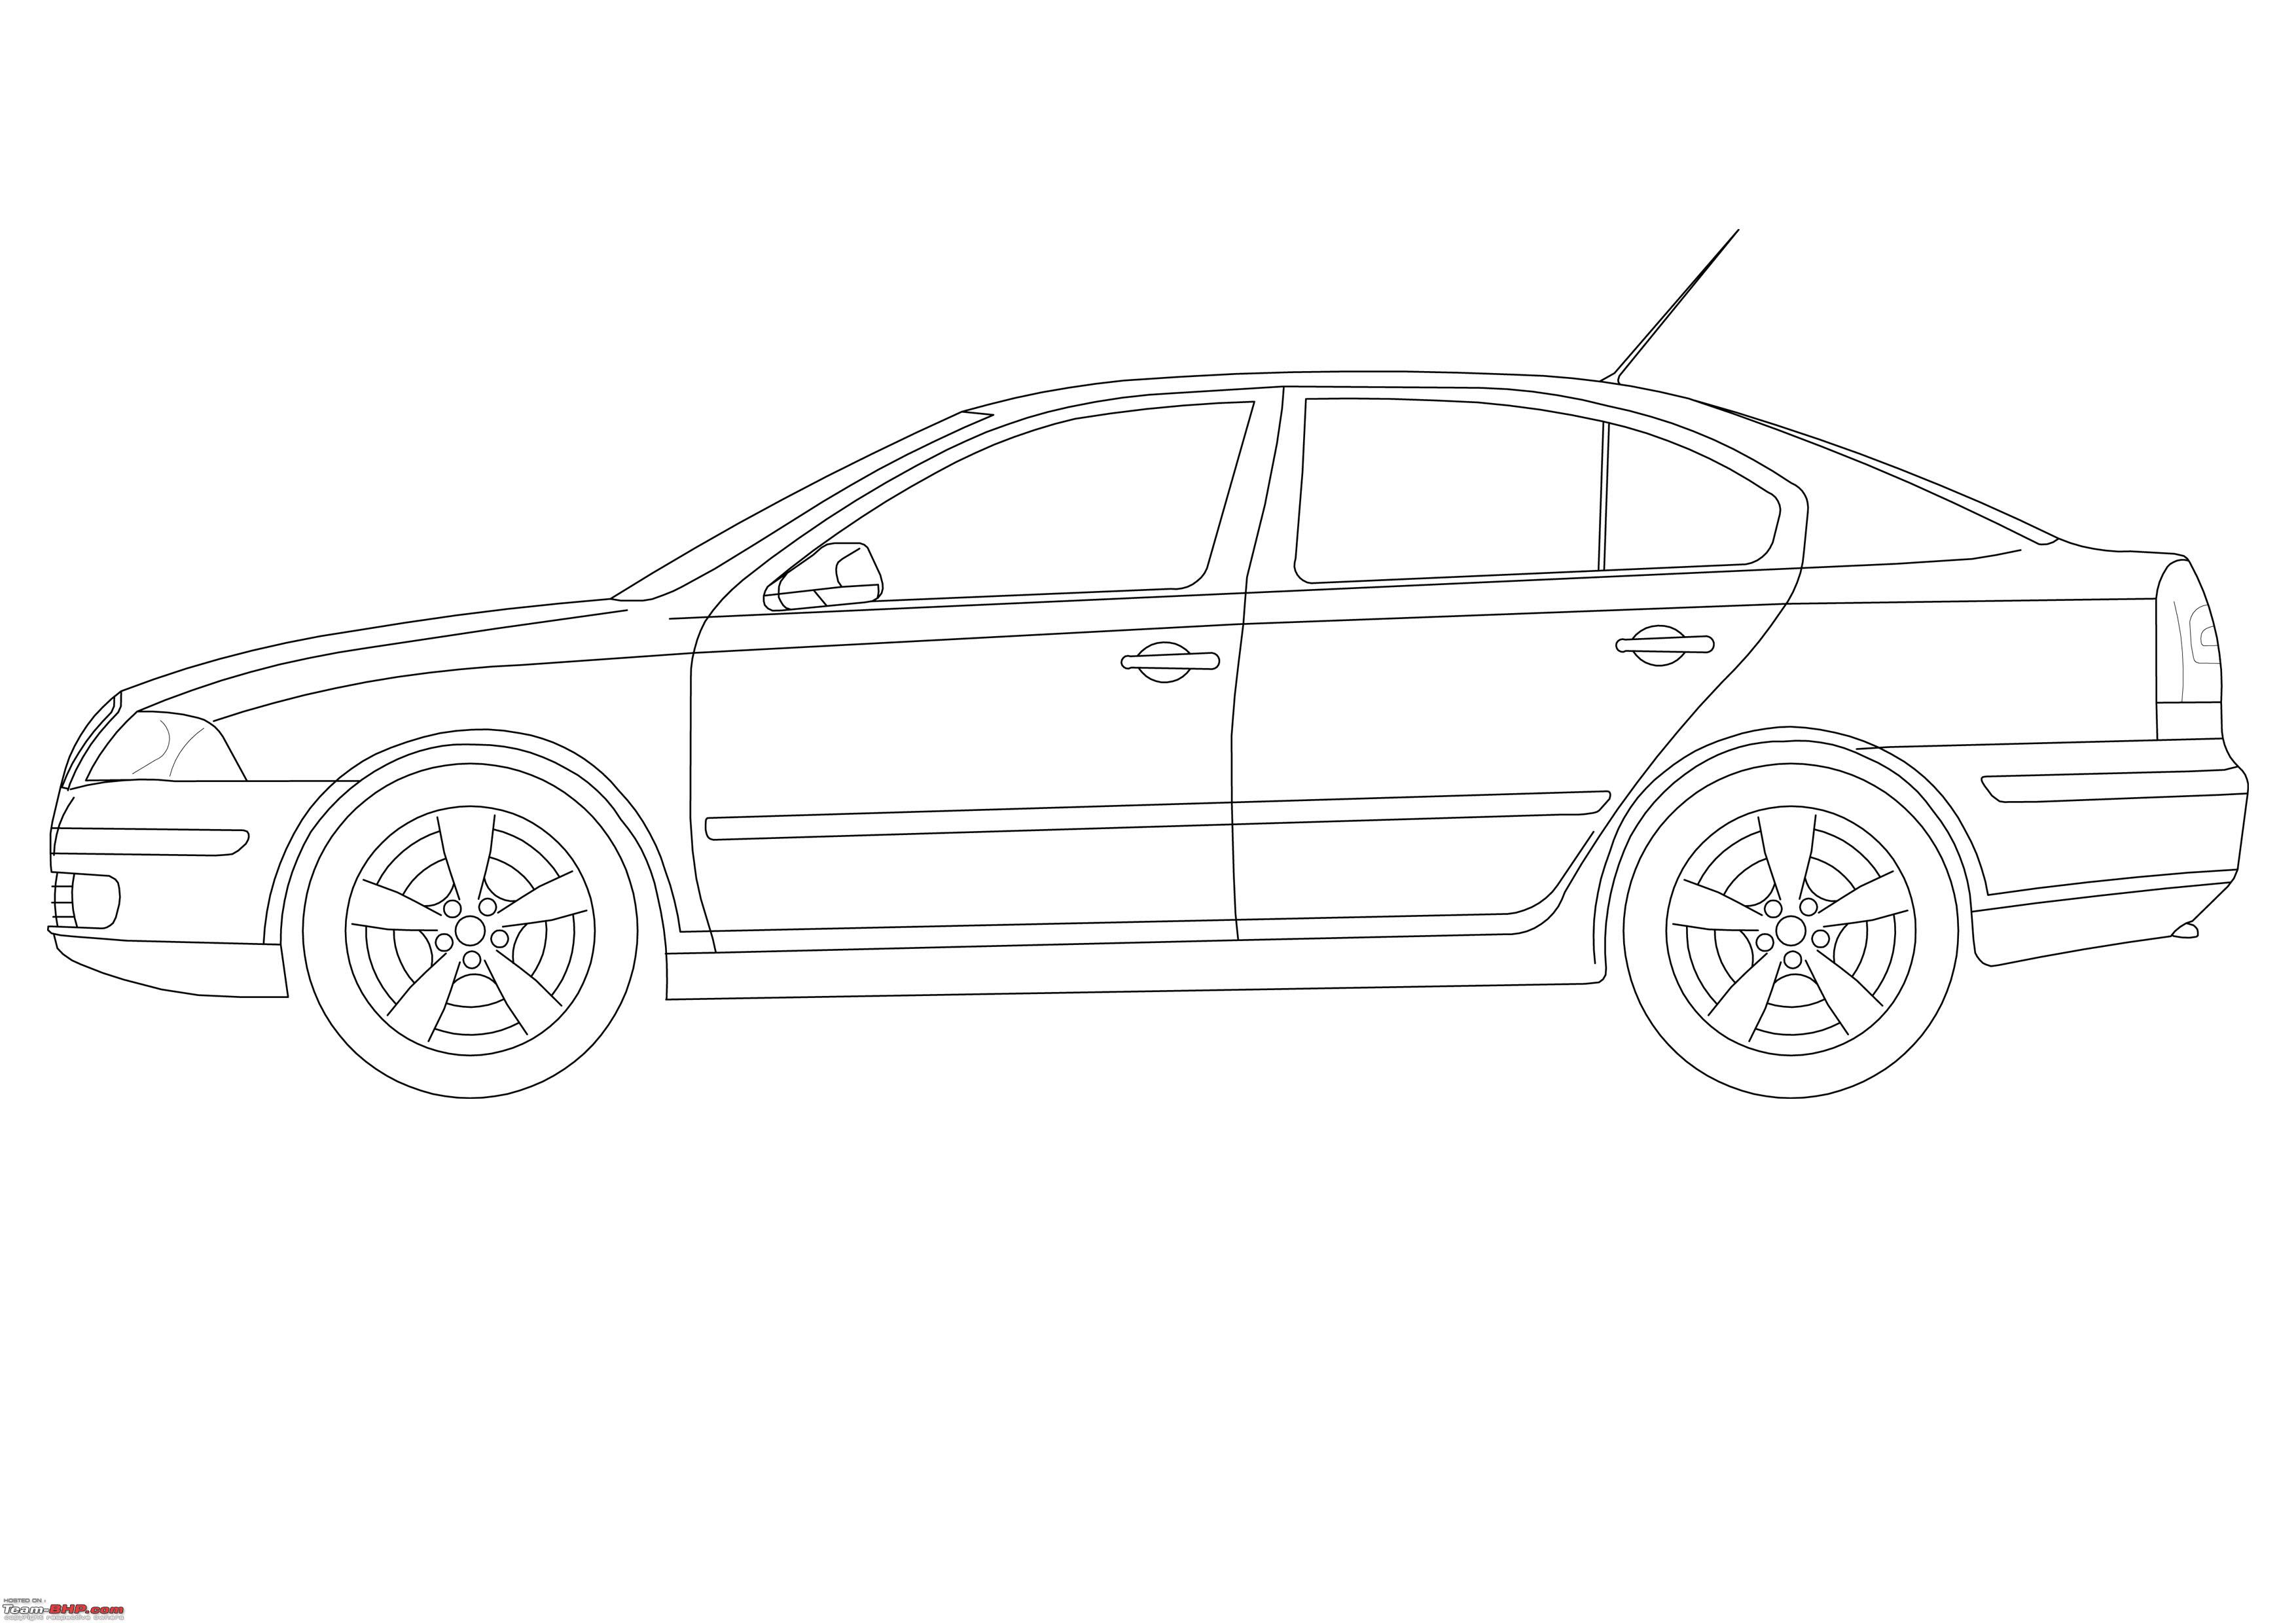 blueprints-line-drawings-of-cars-team-bhp